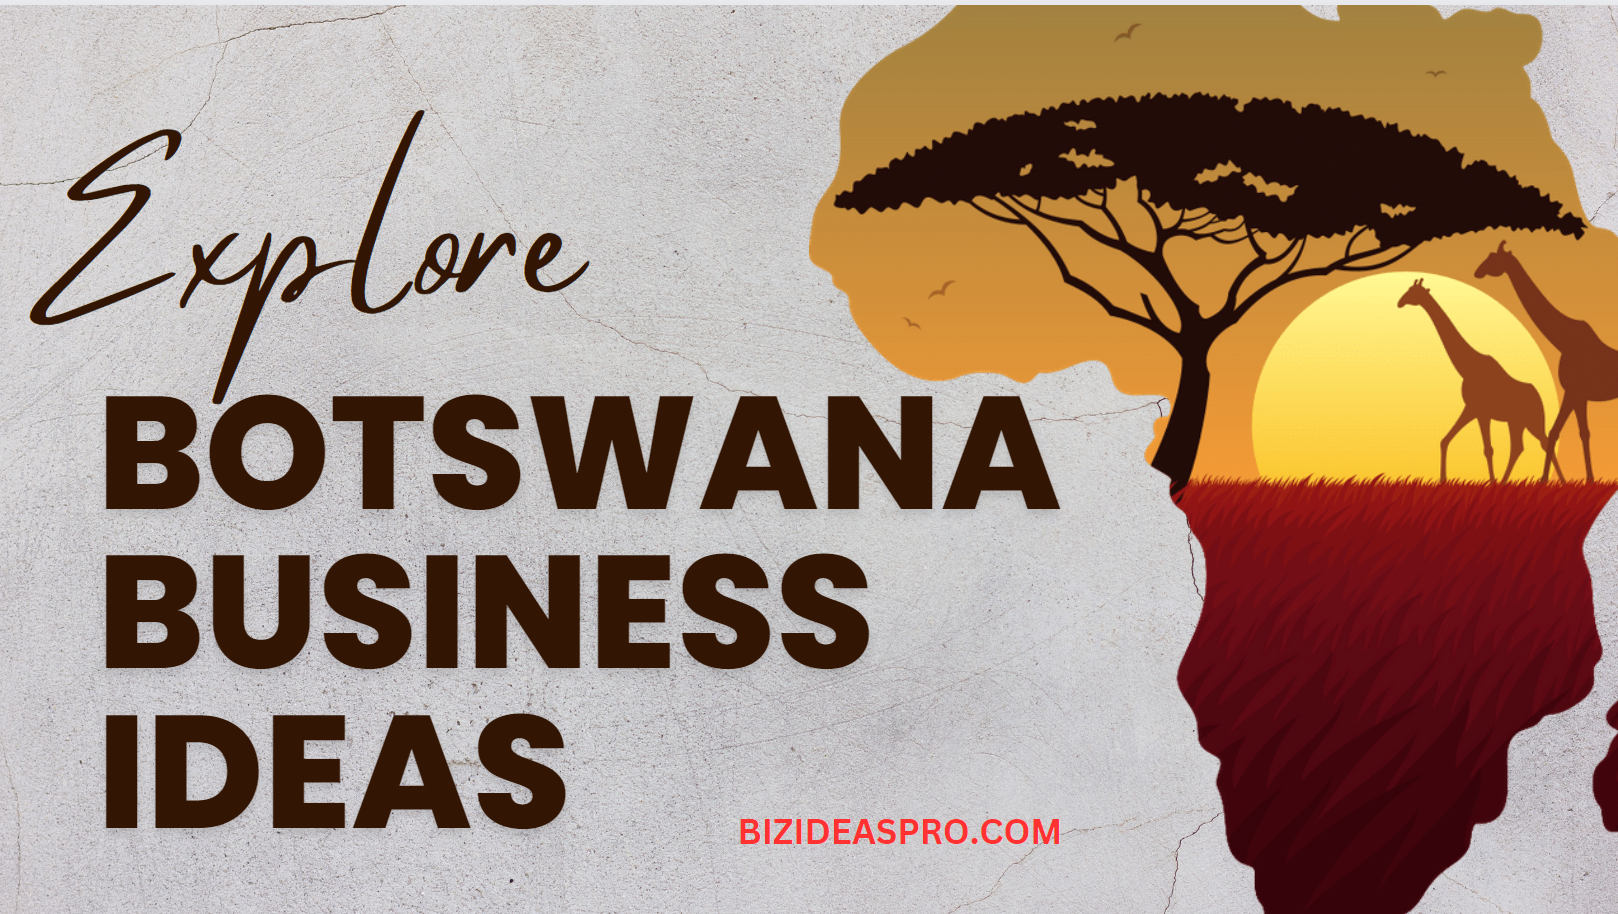 botswana business ideas by bizideaspro.com